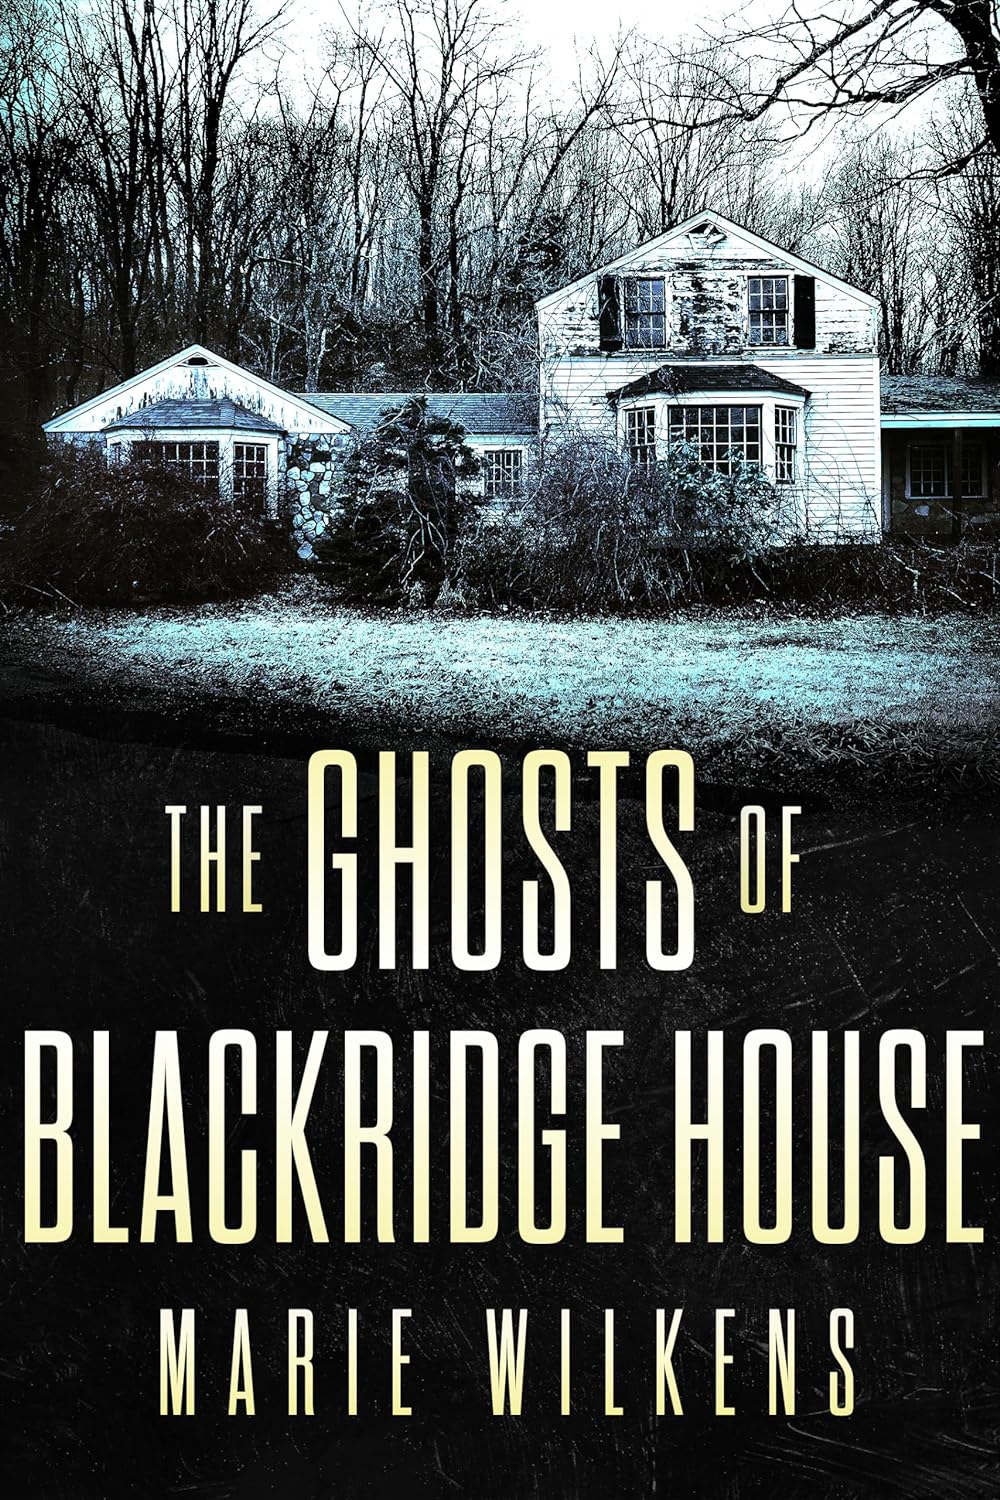 The Ghosts of Blackridge House